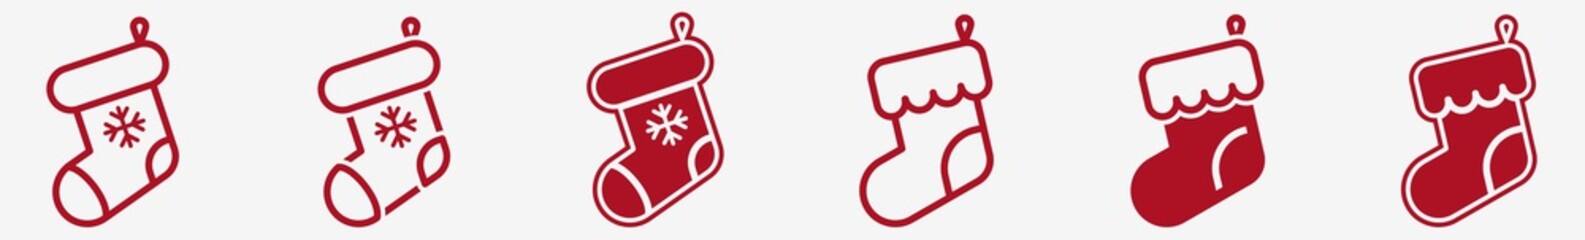 Christmas Stocking Icon Set Red | X-Mas Stockings Vector Illustration Set | Xmas Stocking Icons Isolated Collection